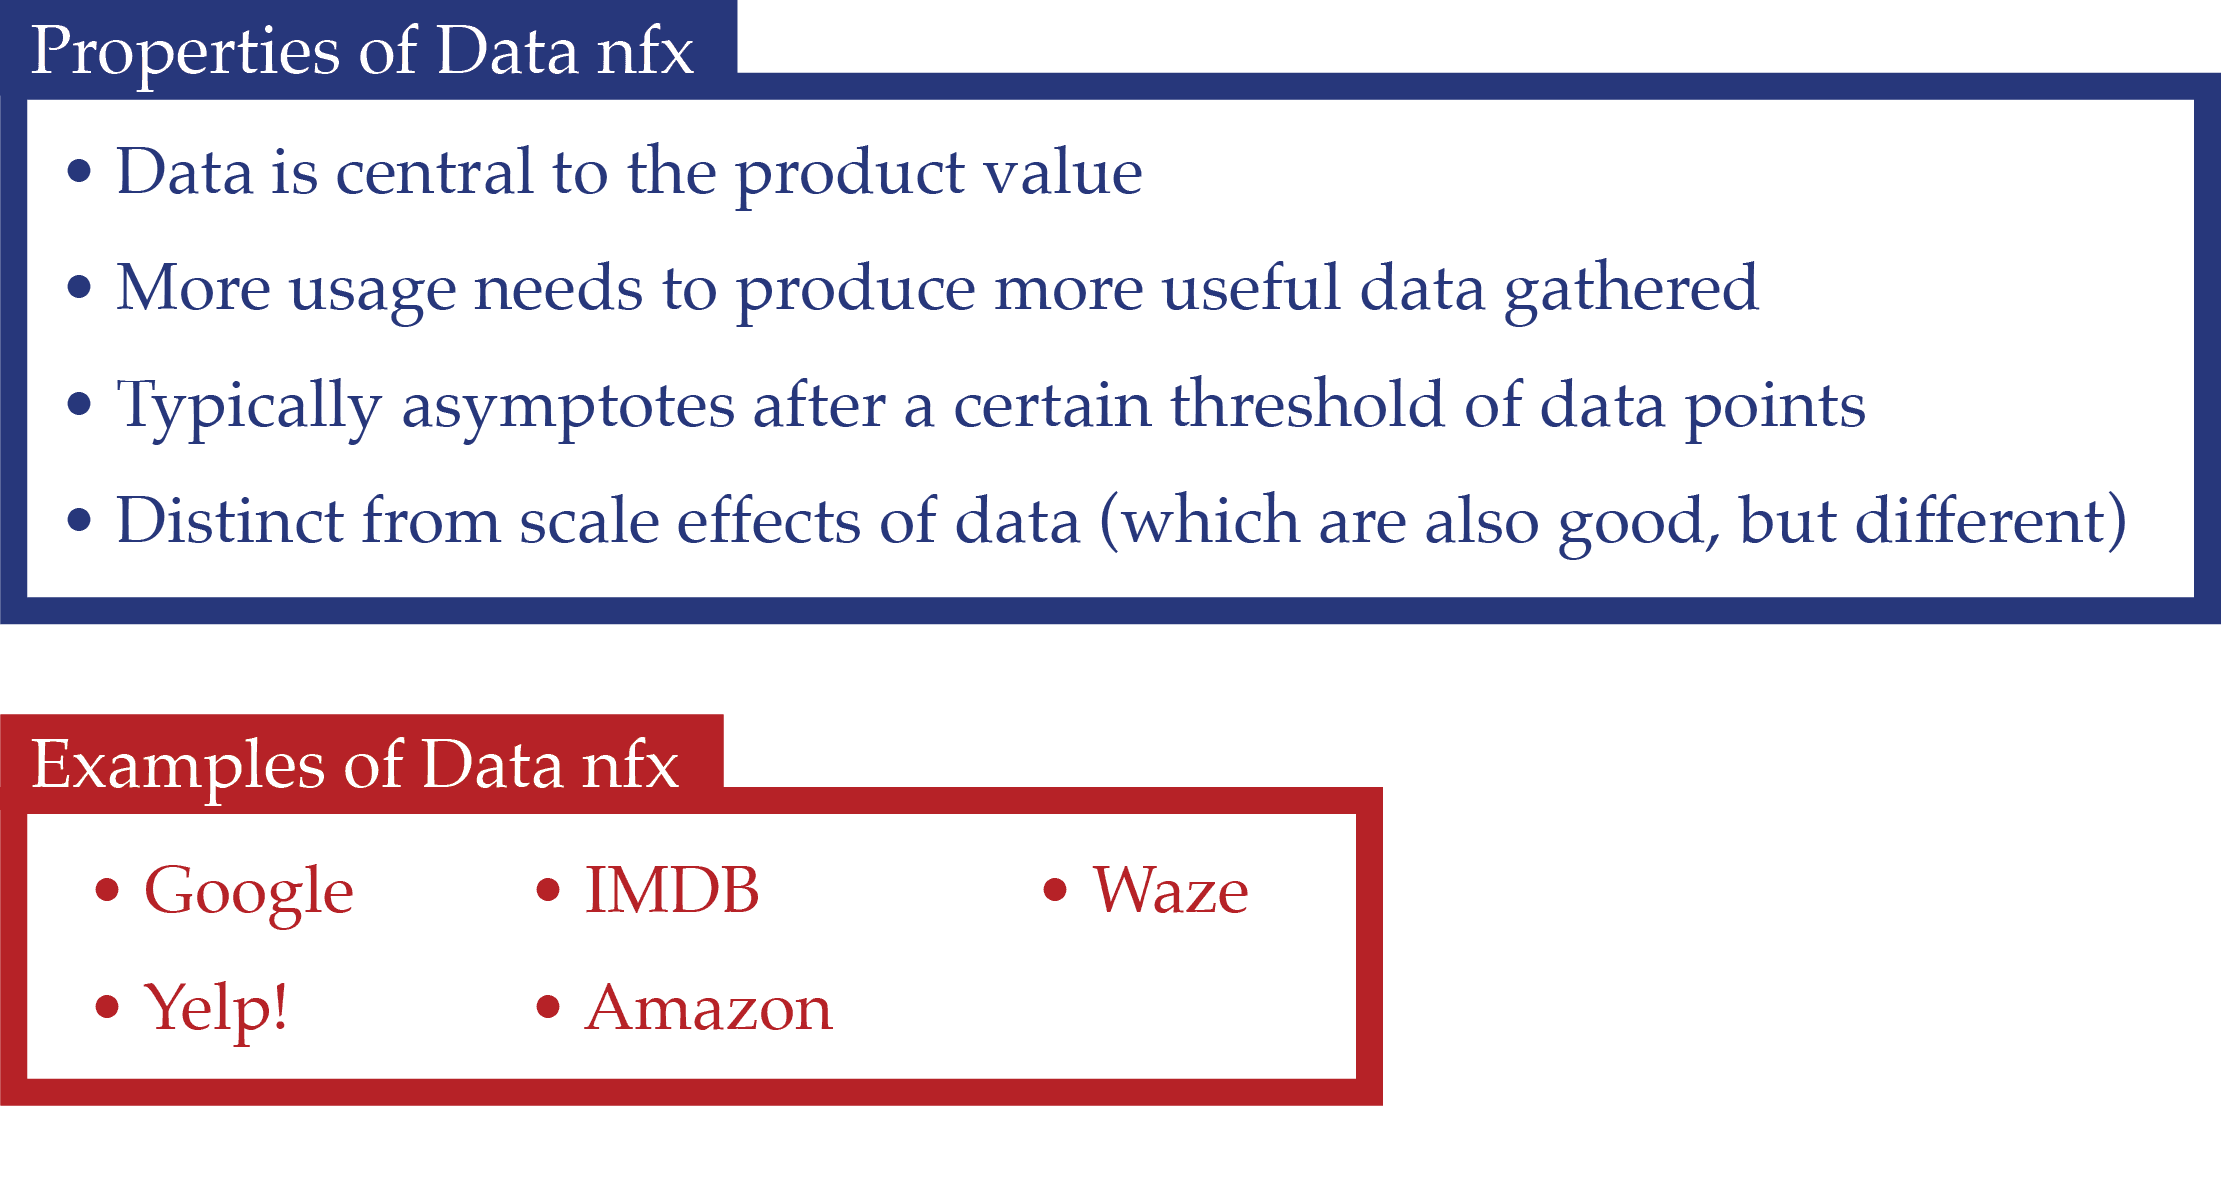 Proprties & examples of data nfx